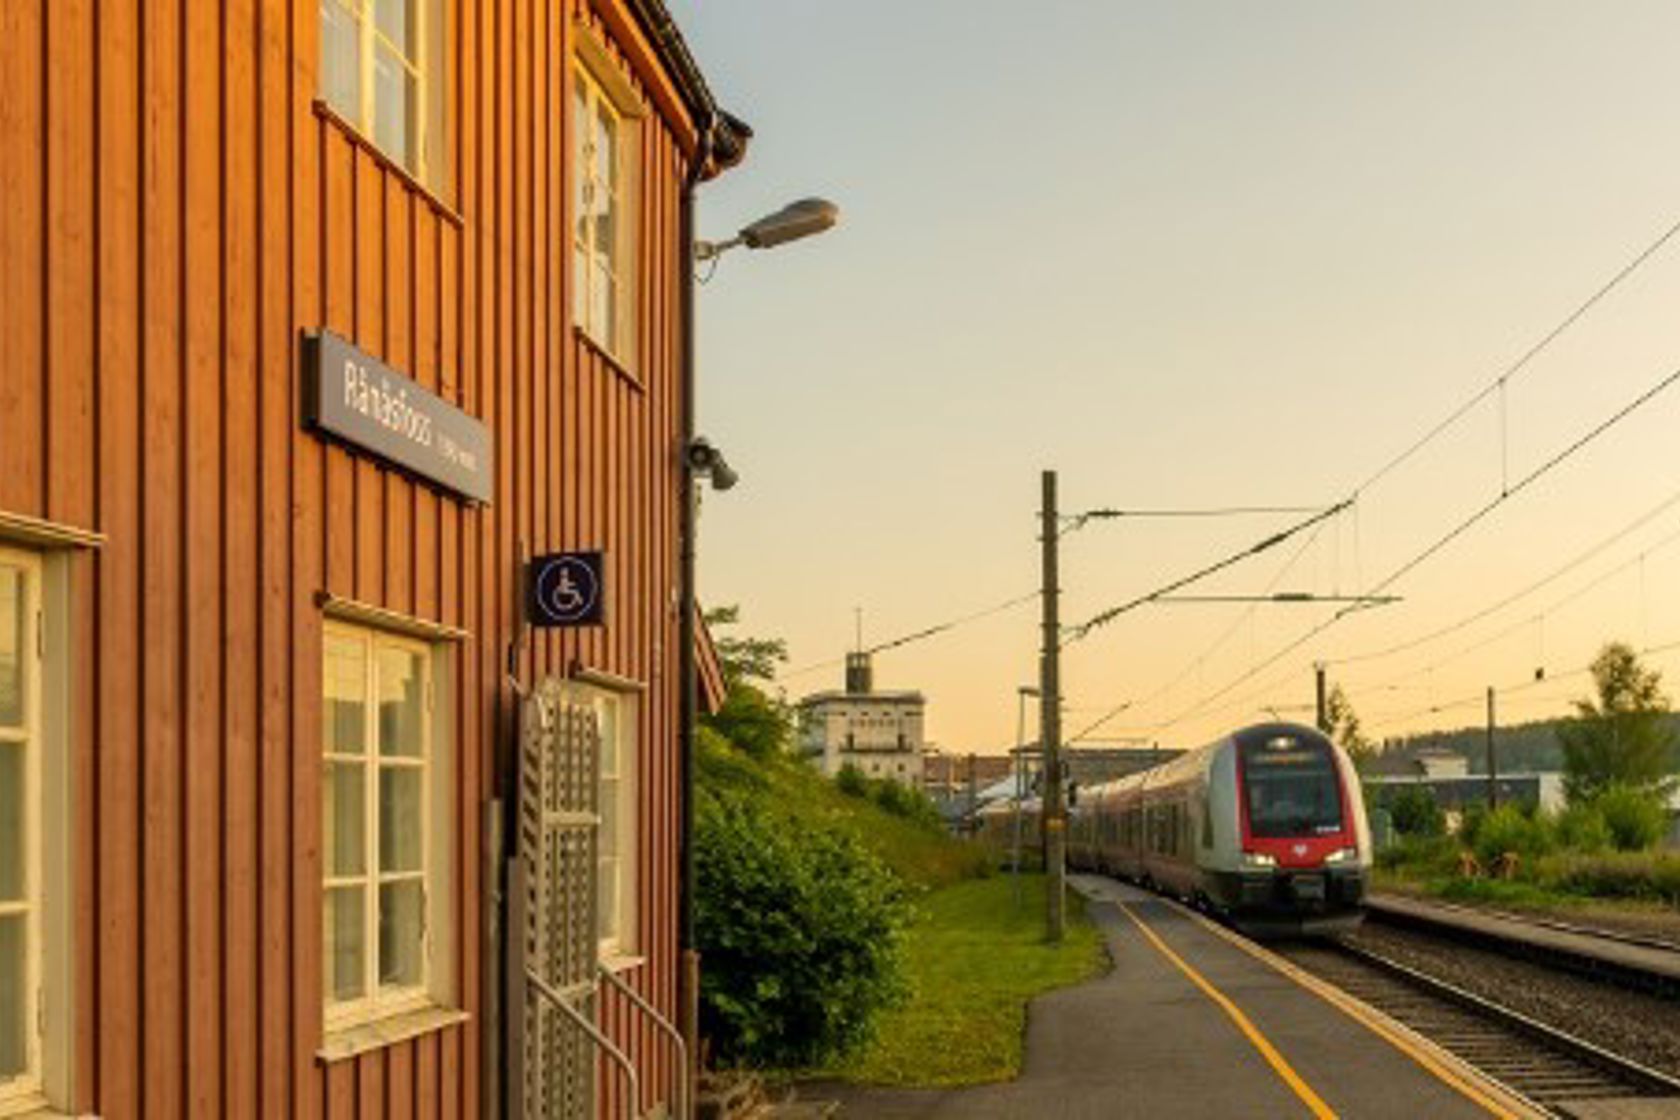 Exterior view of Rånåsfoss station